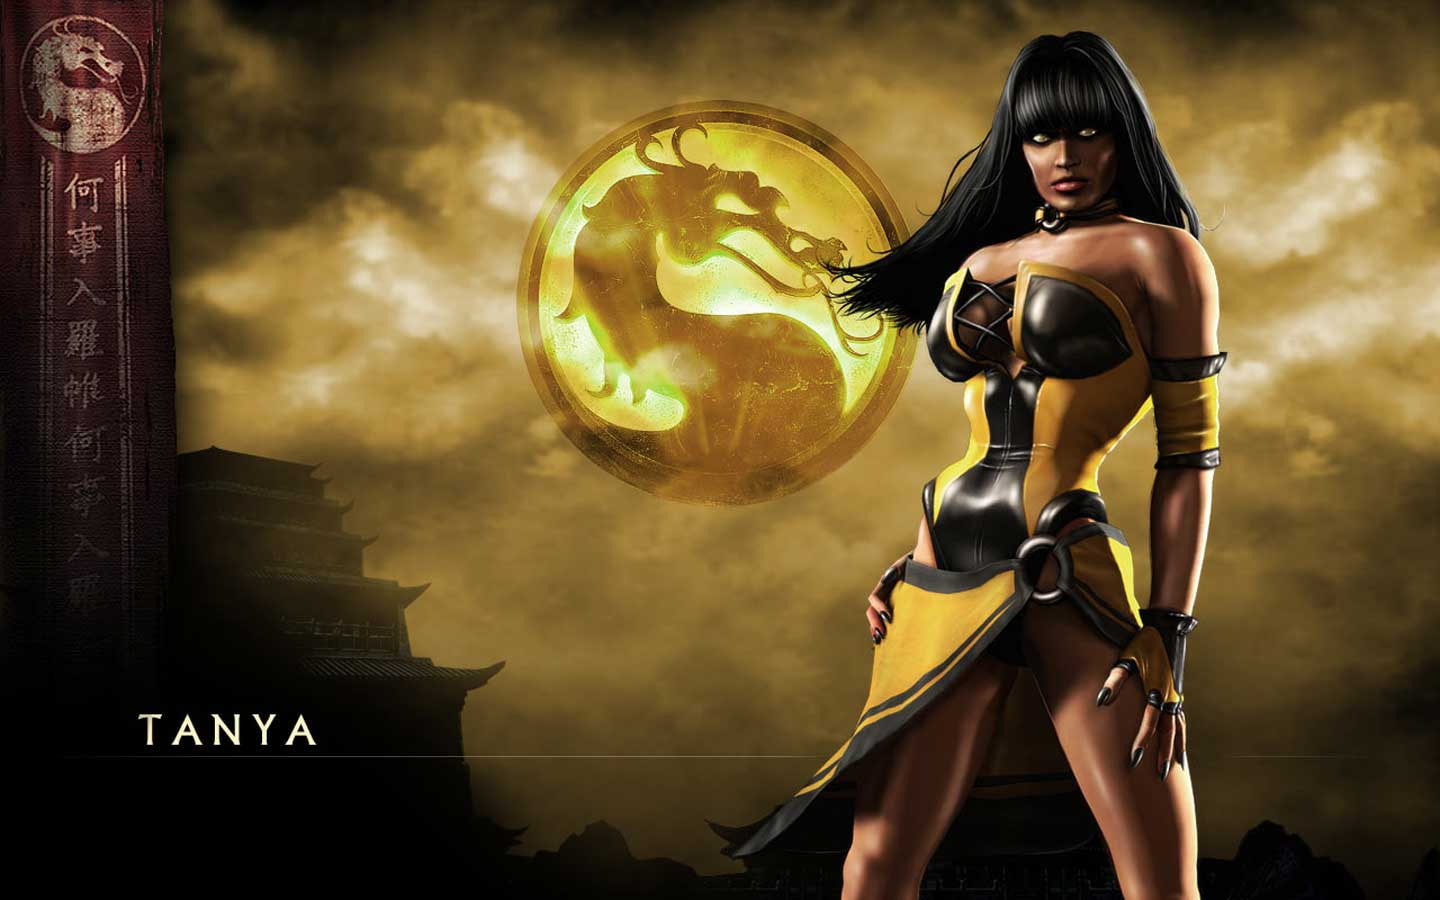 deception kombat tanya Video Games Mortal Kombat HD Art